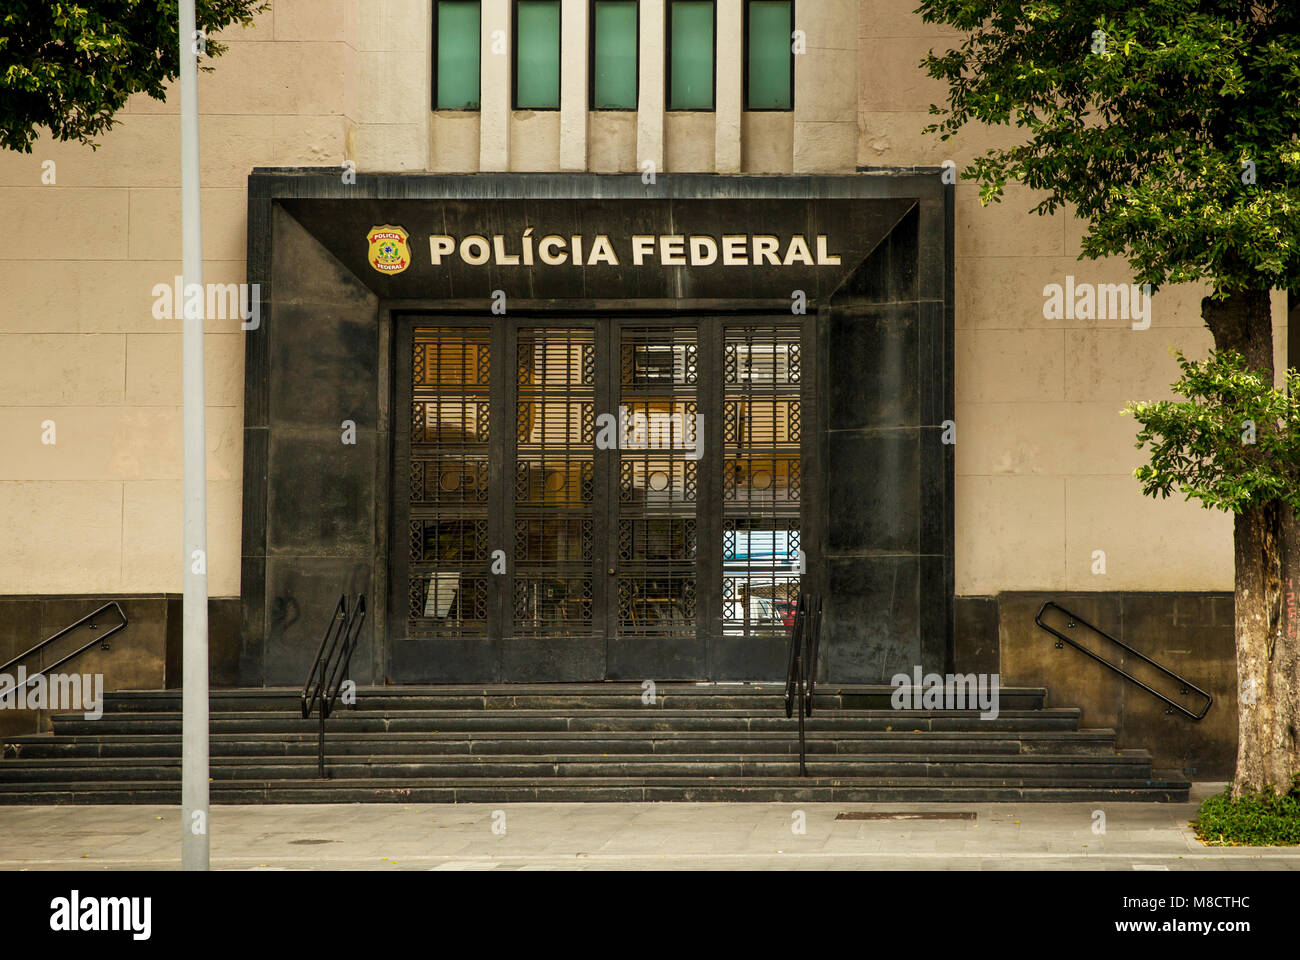 Police station in Rio de Janeiro, Brazil Stock Photo